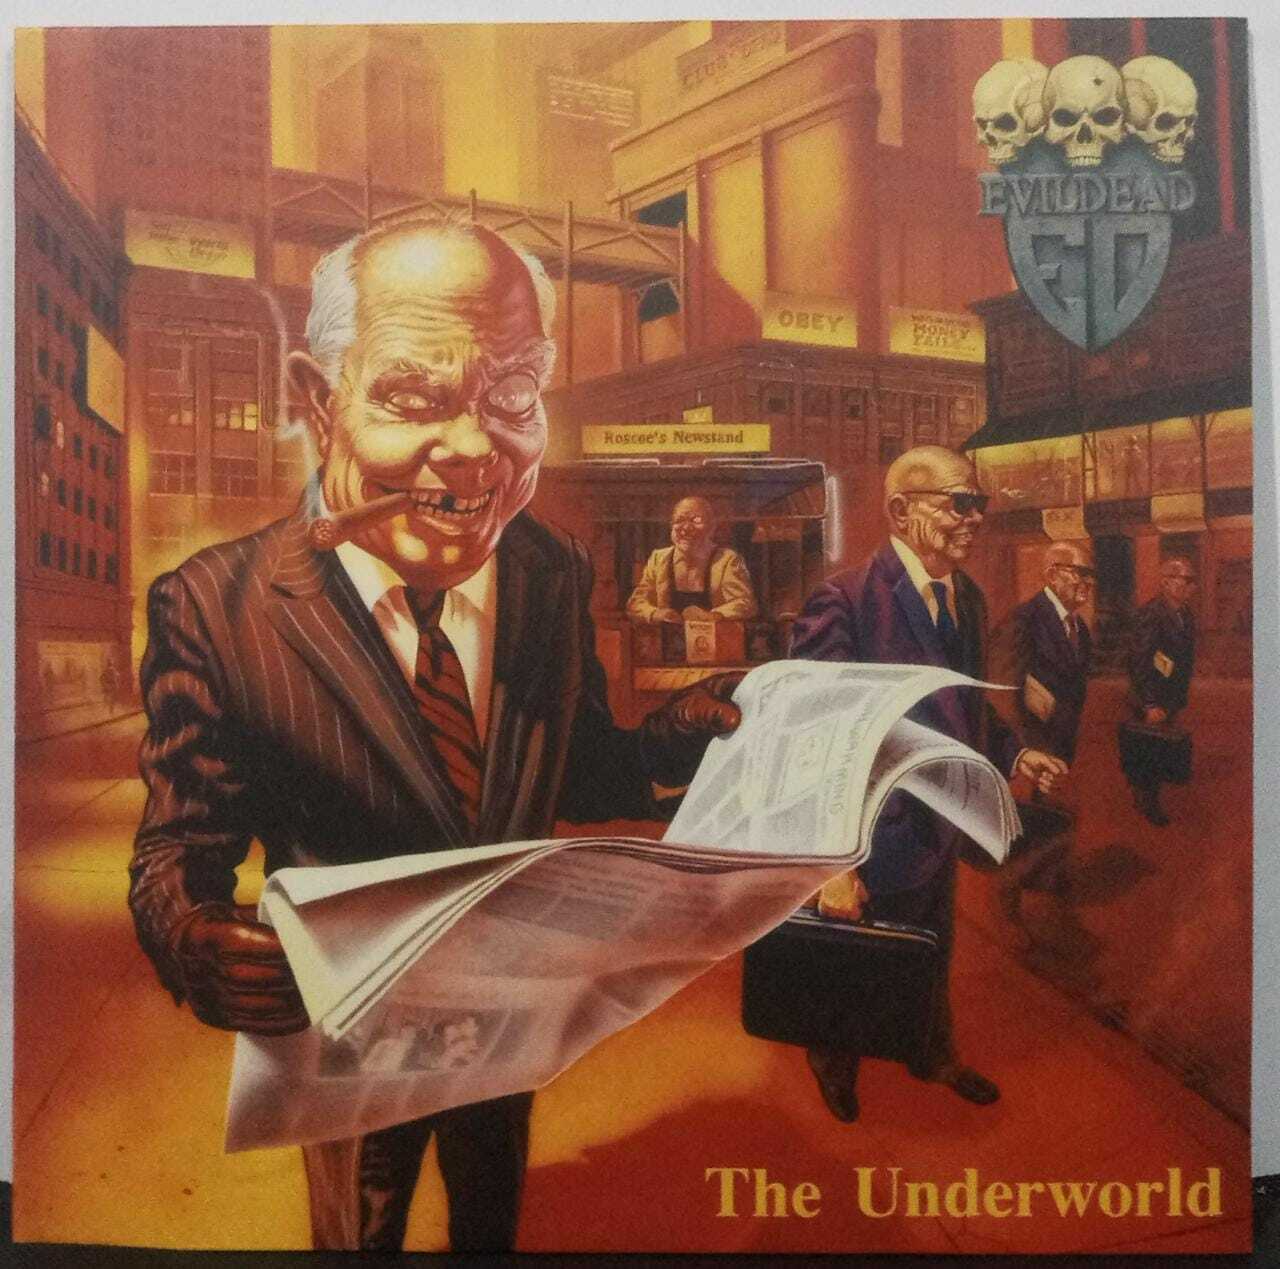 VINIL - Evildead - the Underworld